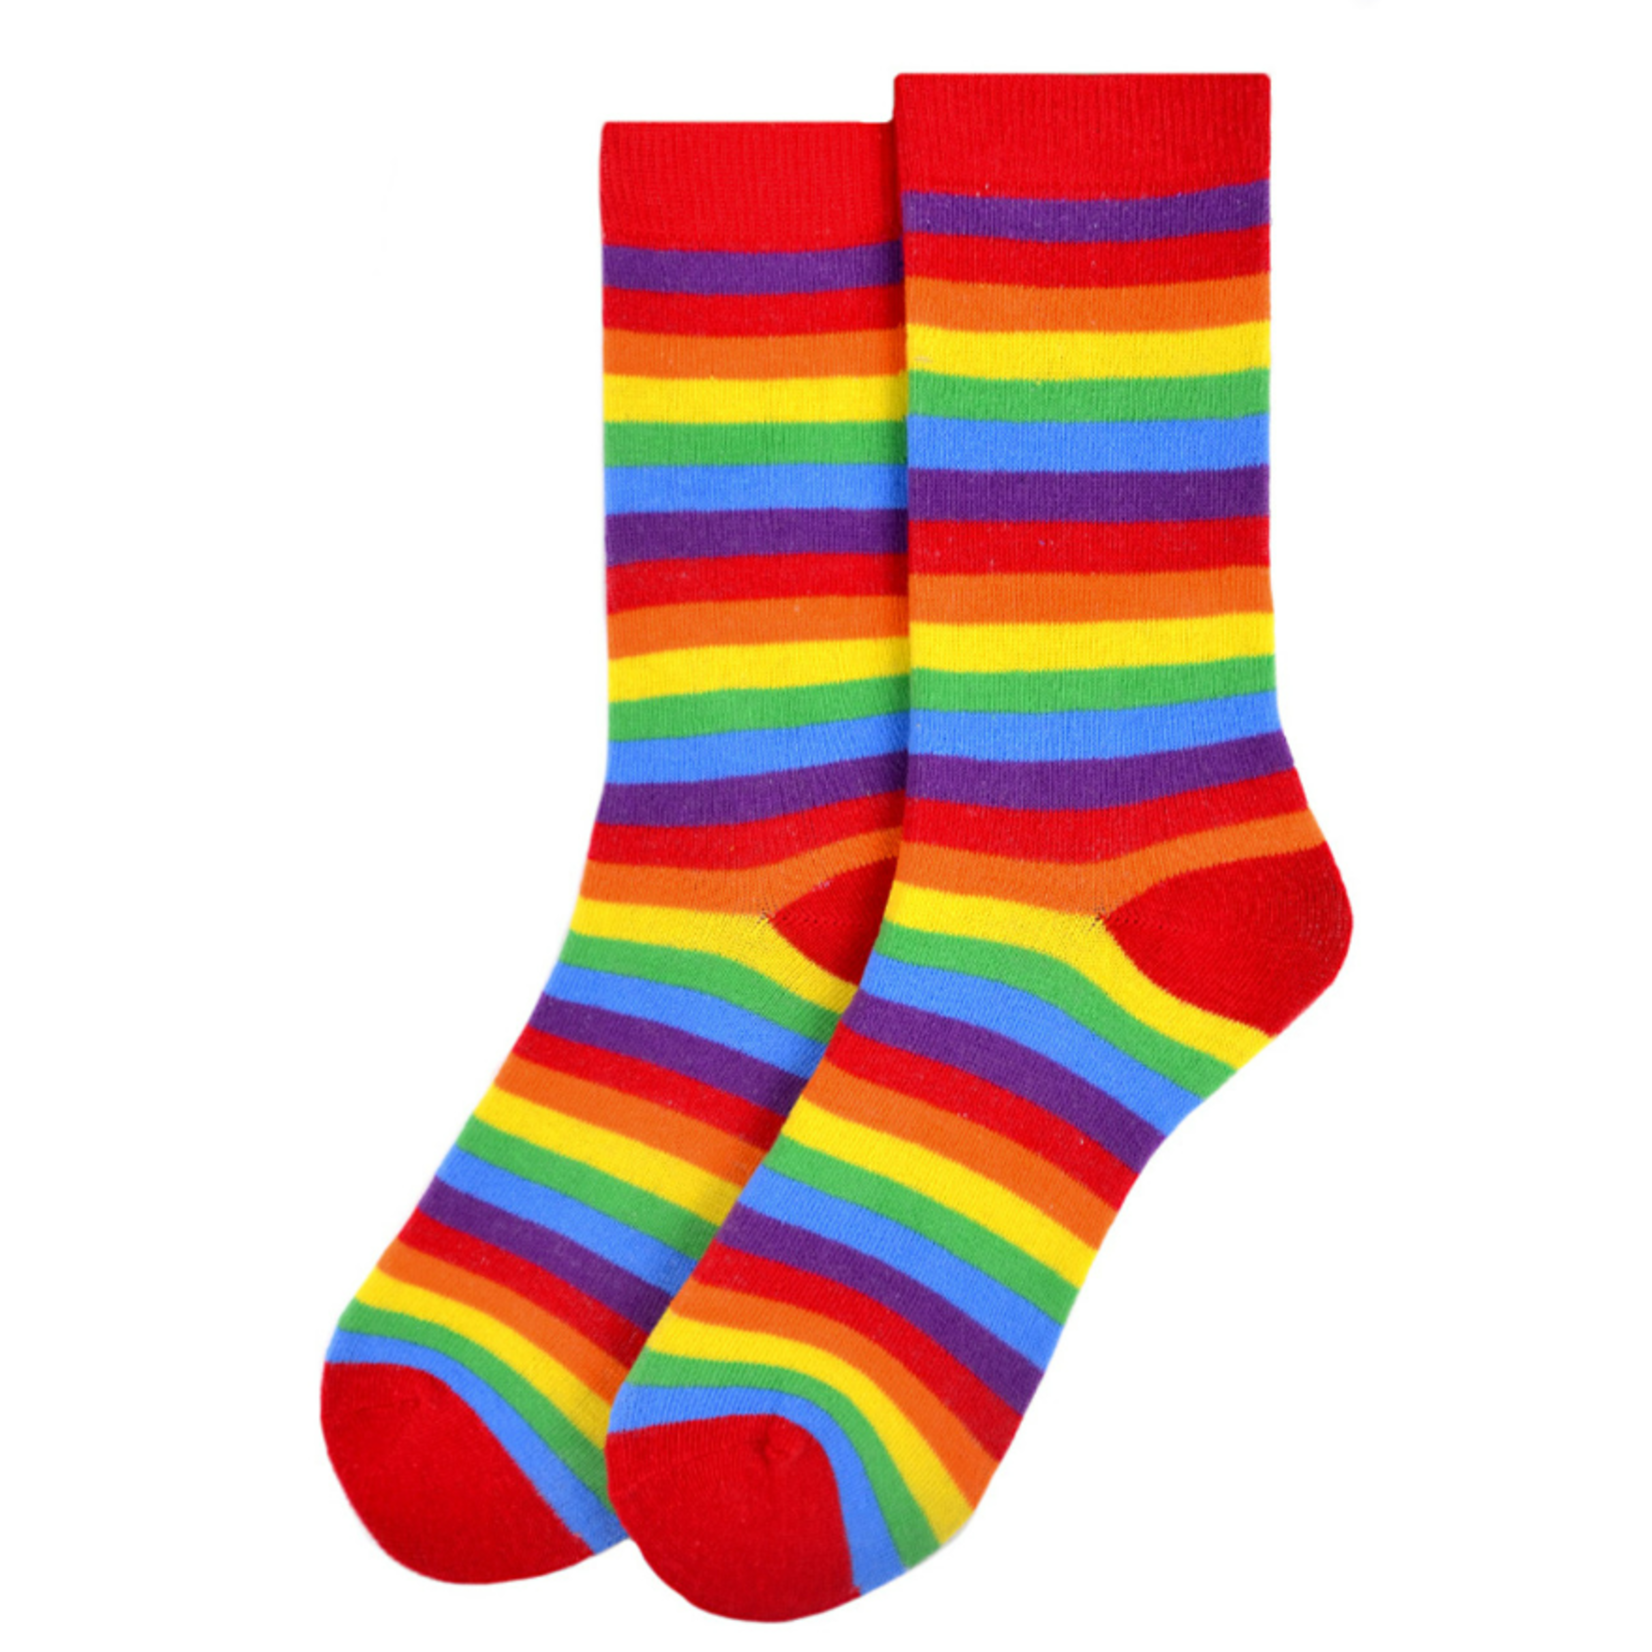 Apparel Women's Rainbow Socks